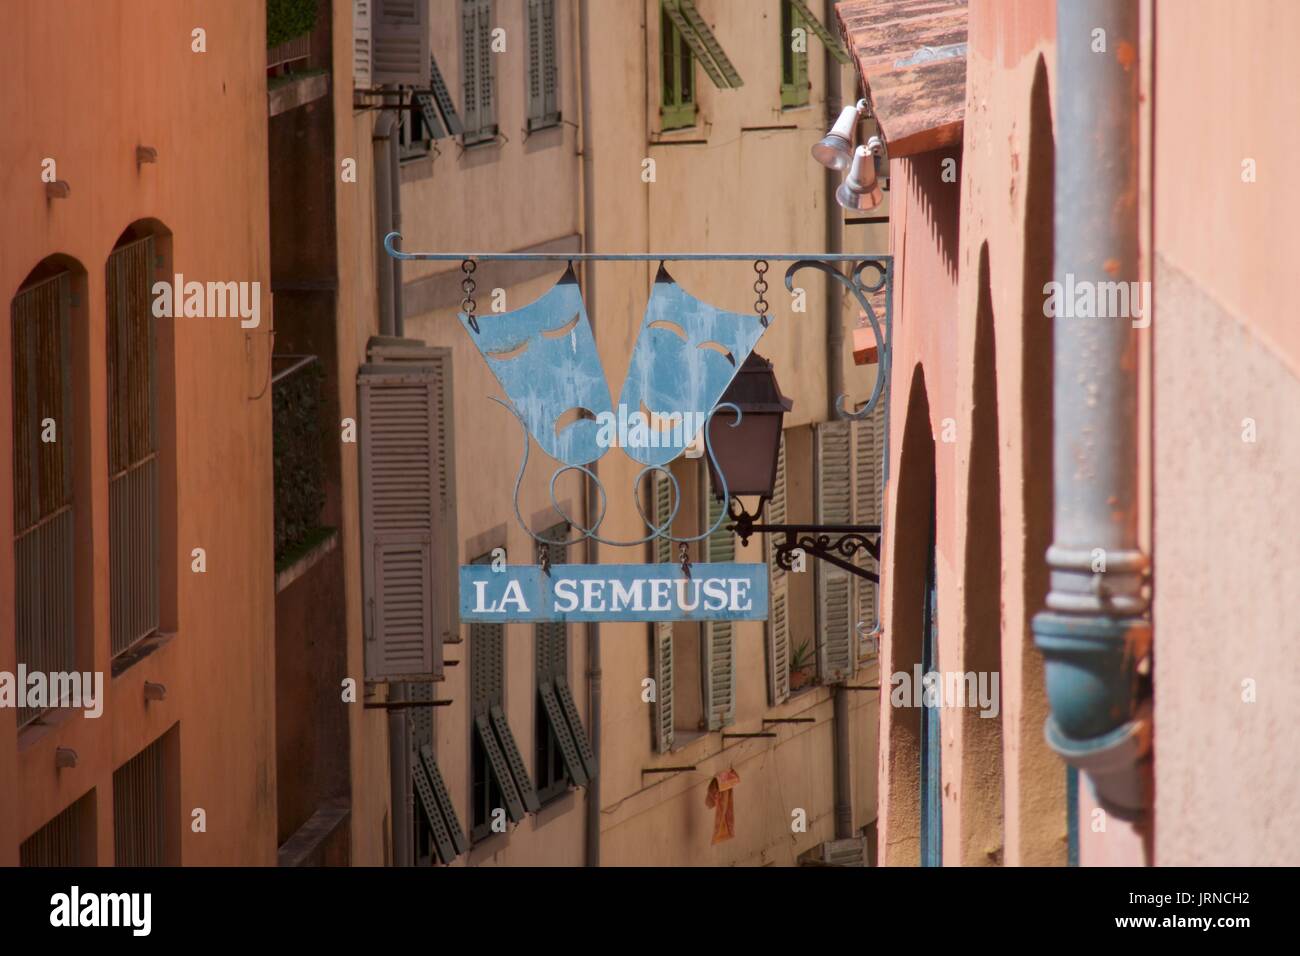 La Semeuse theatre sign in alley, Nice, France Stock Photo